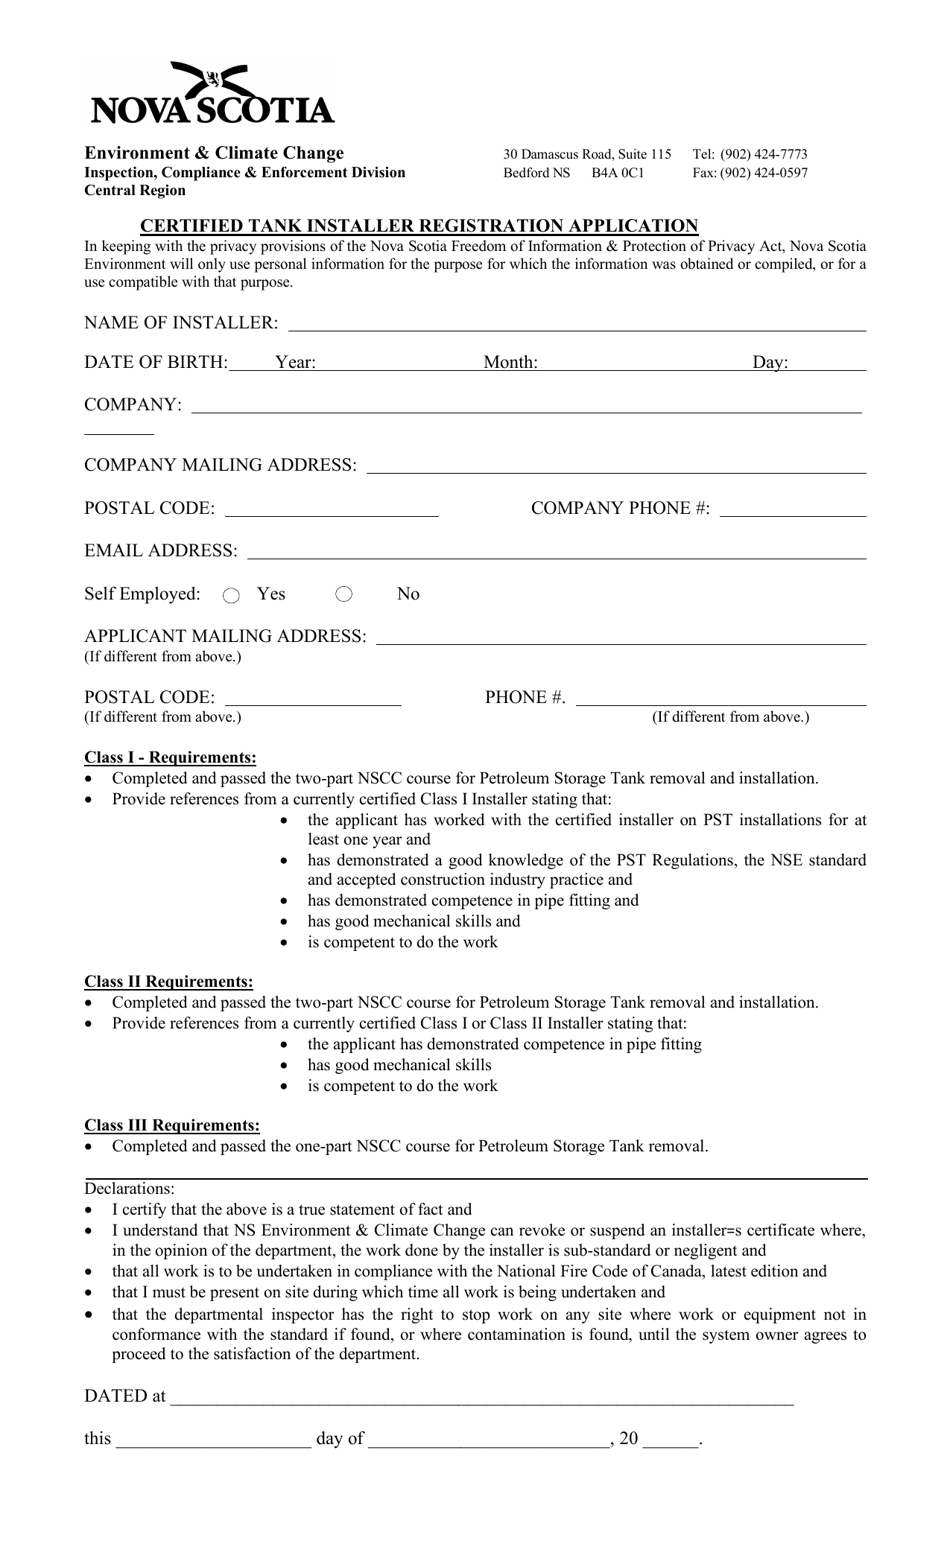 Certified Tank Installer Registration Application - Nova Scotia, Canada, Page 1